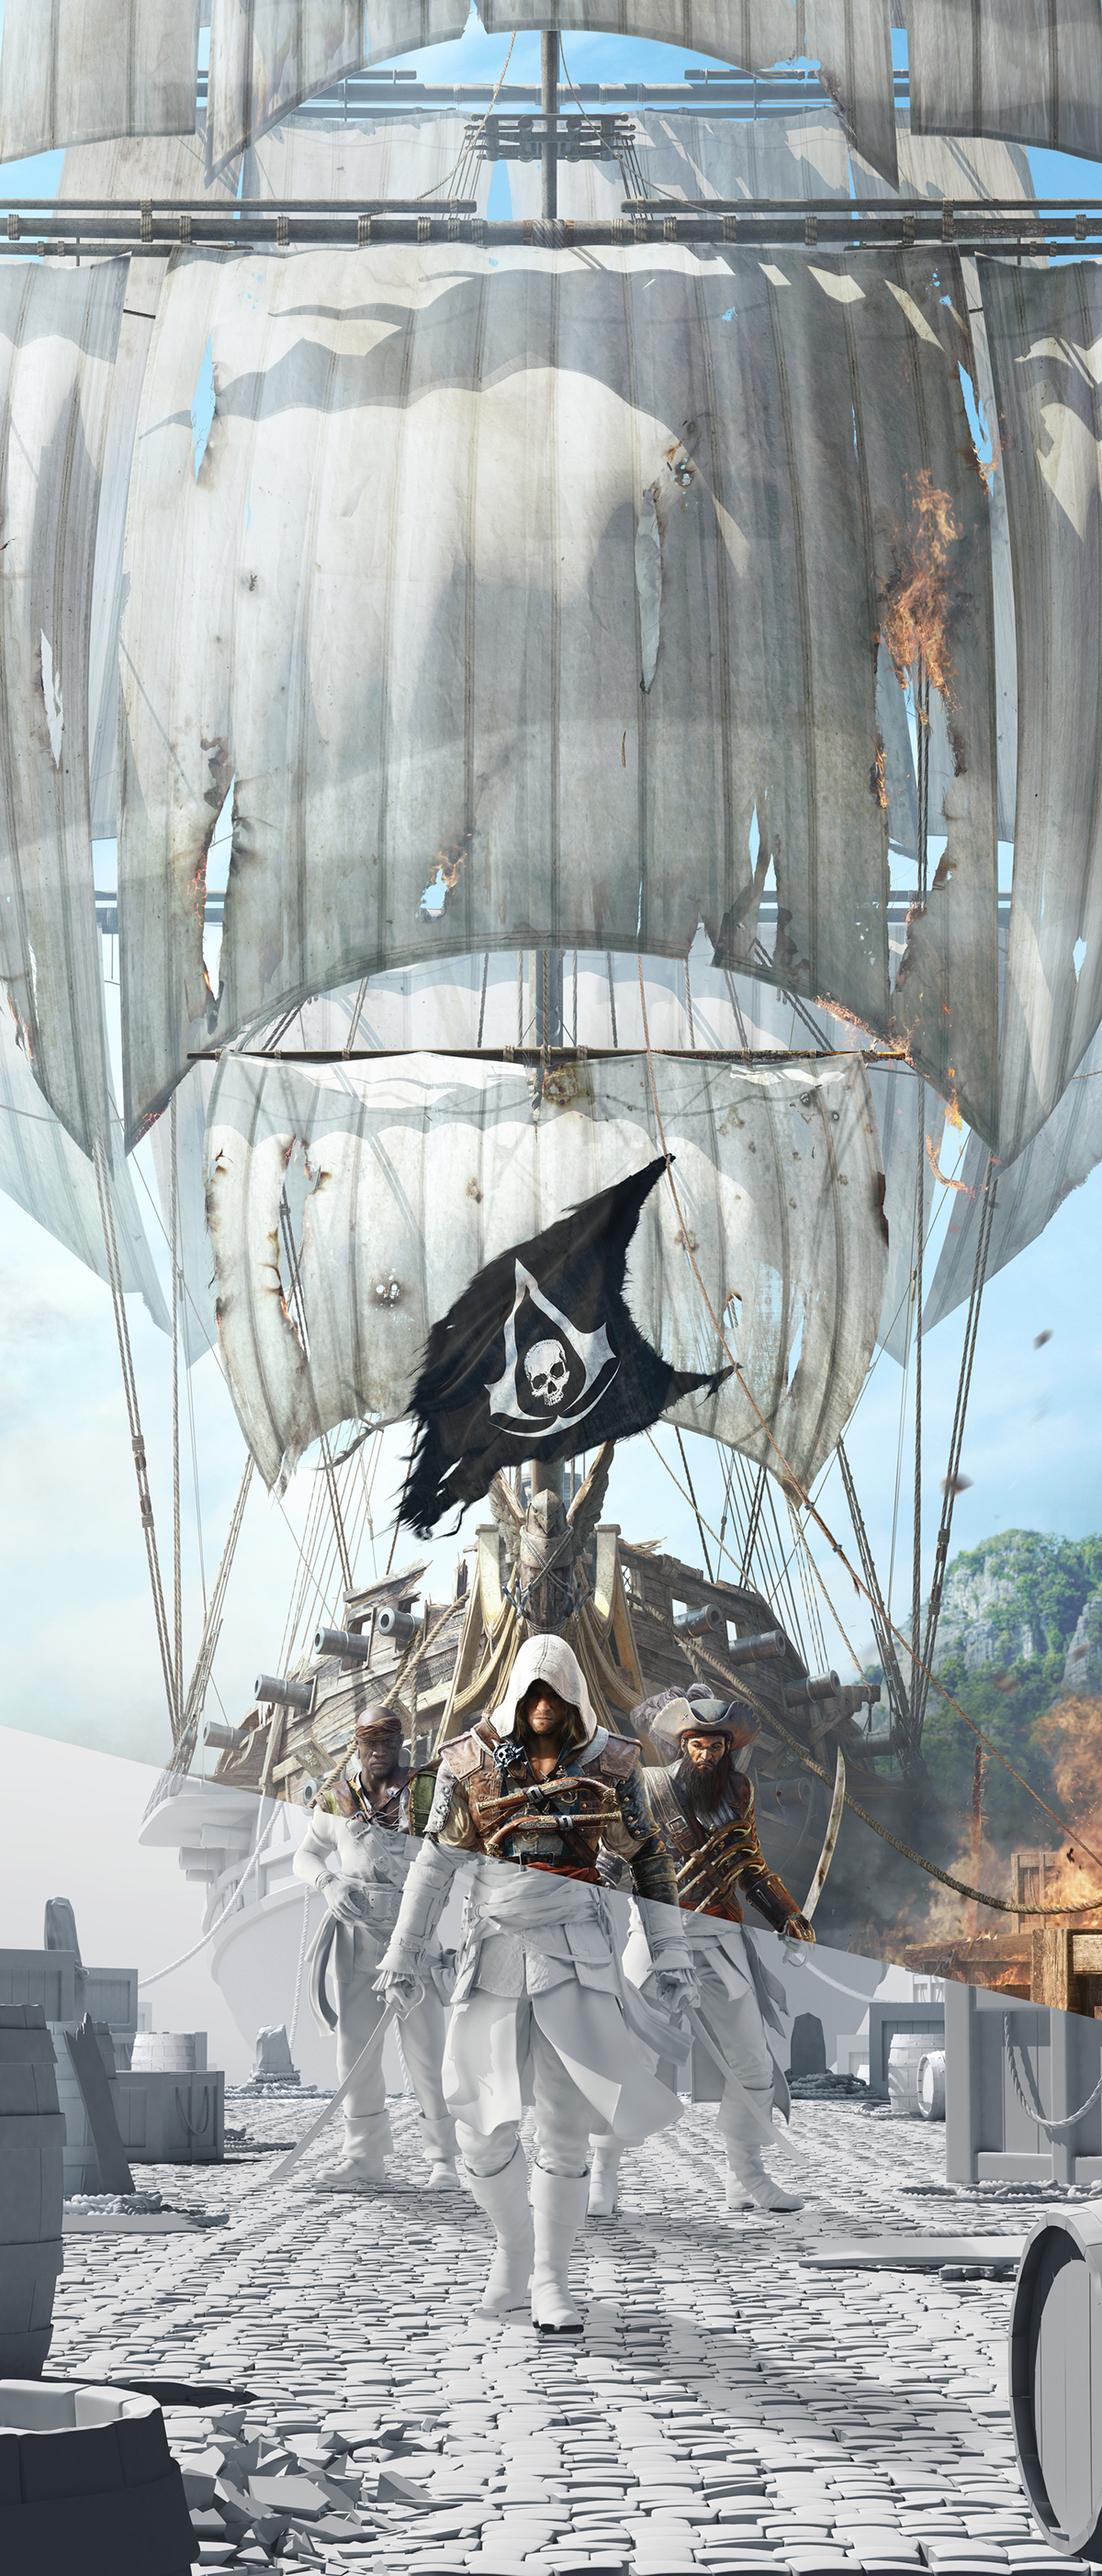 assassins creed ubisoft game AAA black flag pirates pirate ship fire port rope Gun powder